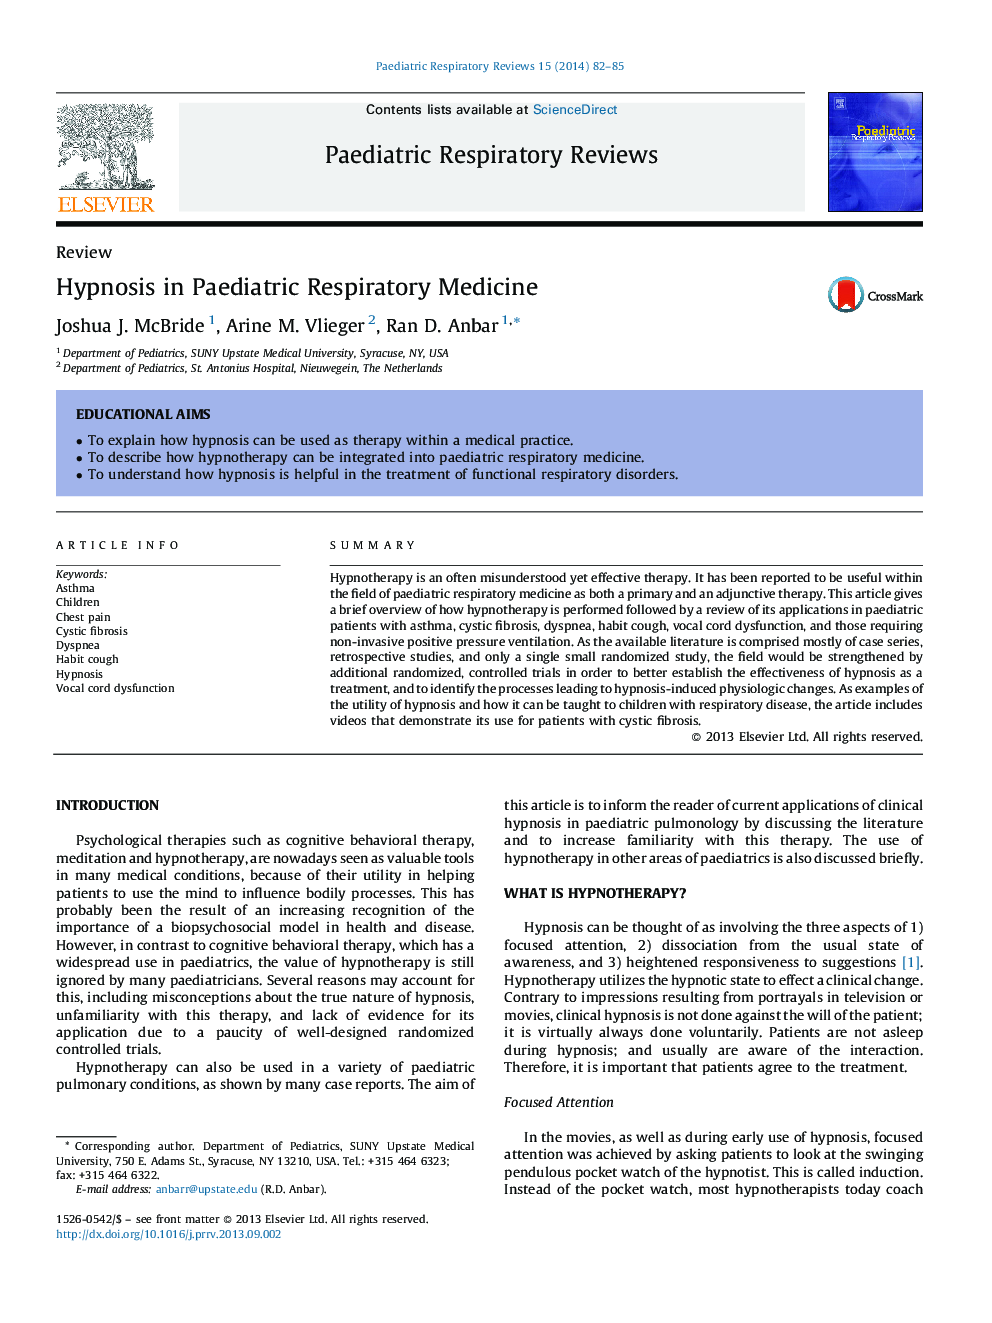 Hypnosis in Paediatric Respiratory Medicine